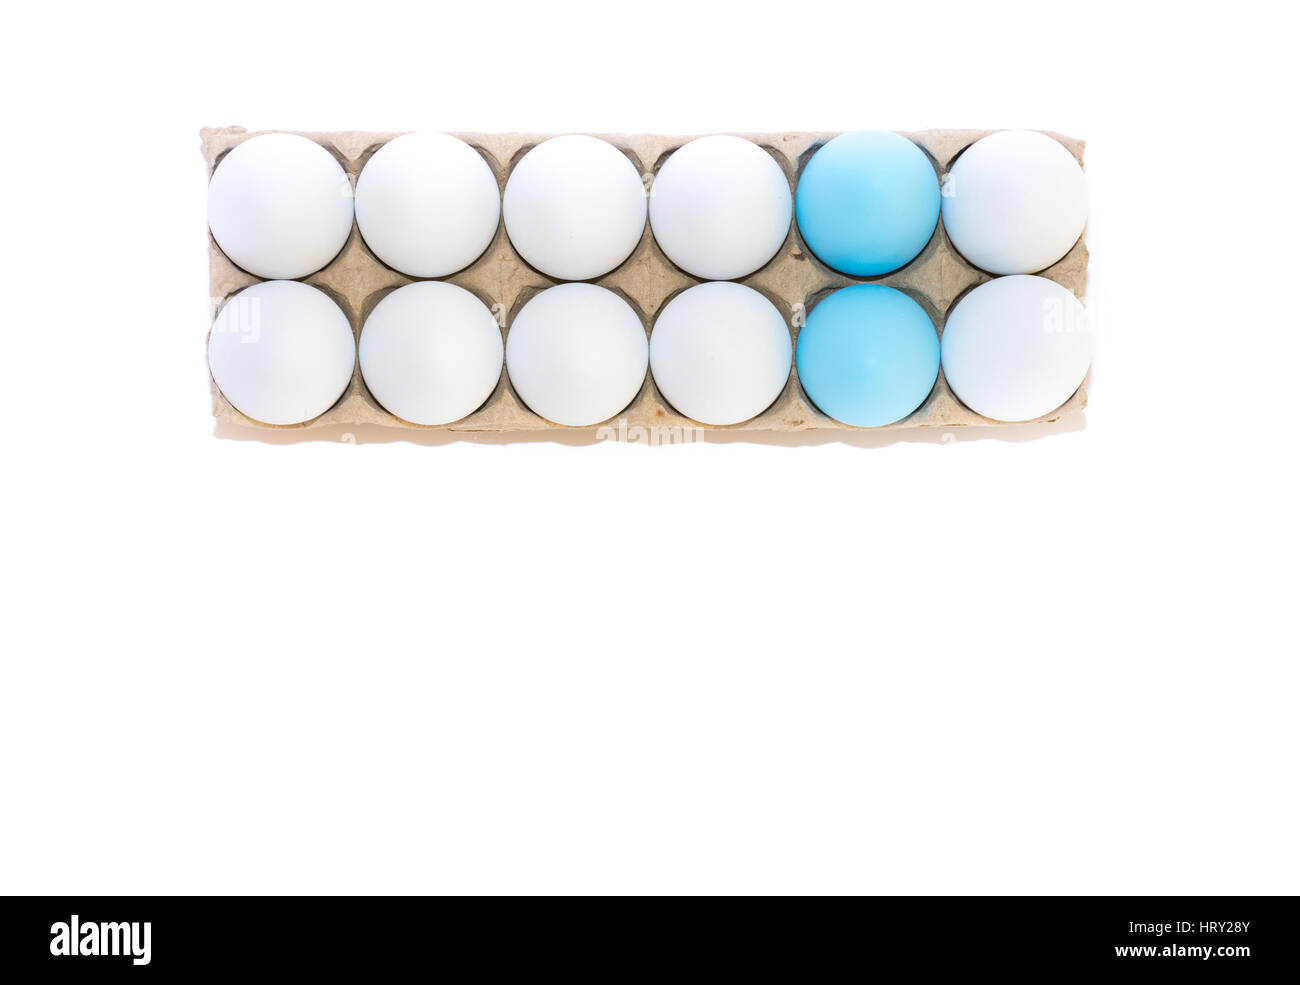 Dos huevos de Pascua teñidos de Robin's Egg azul y diez huevos de gallina blanca en cartón desde arriba contra un fondo blanco con espacio de copia. Foto de stock